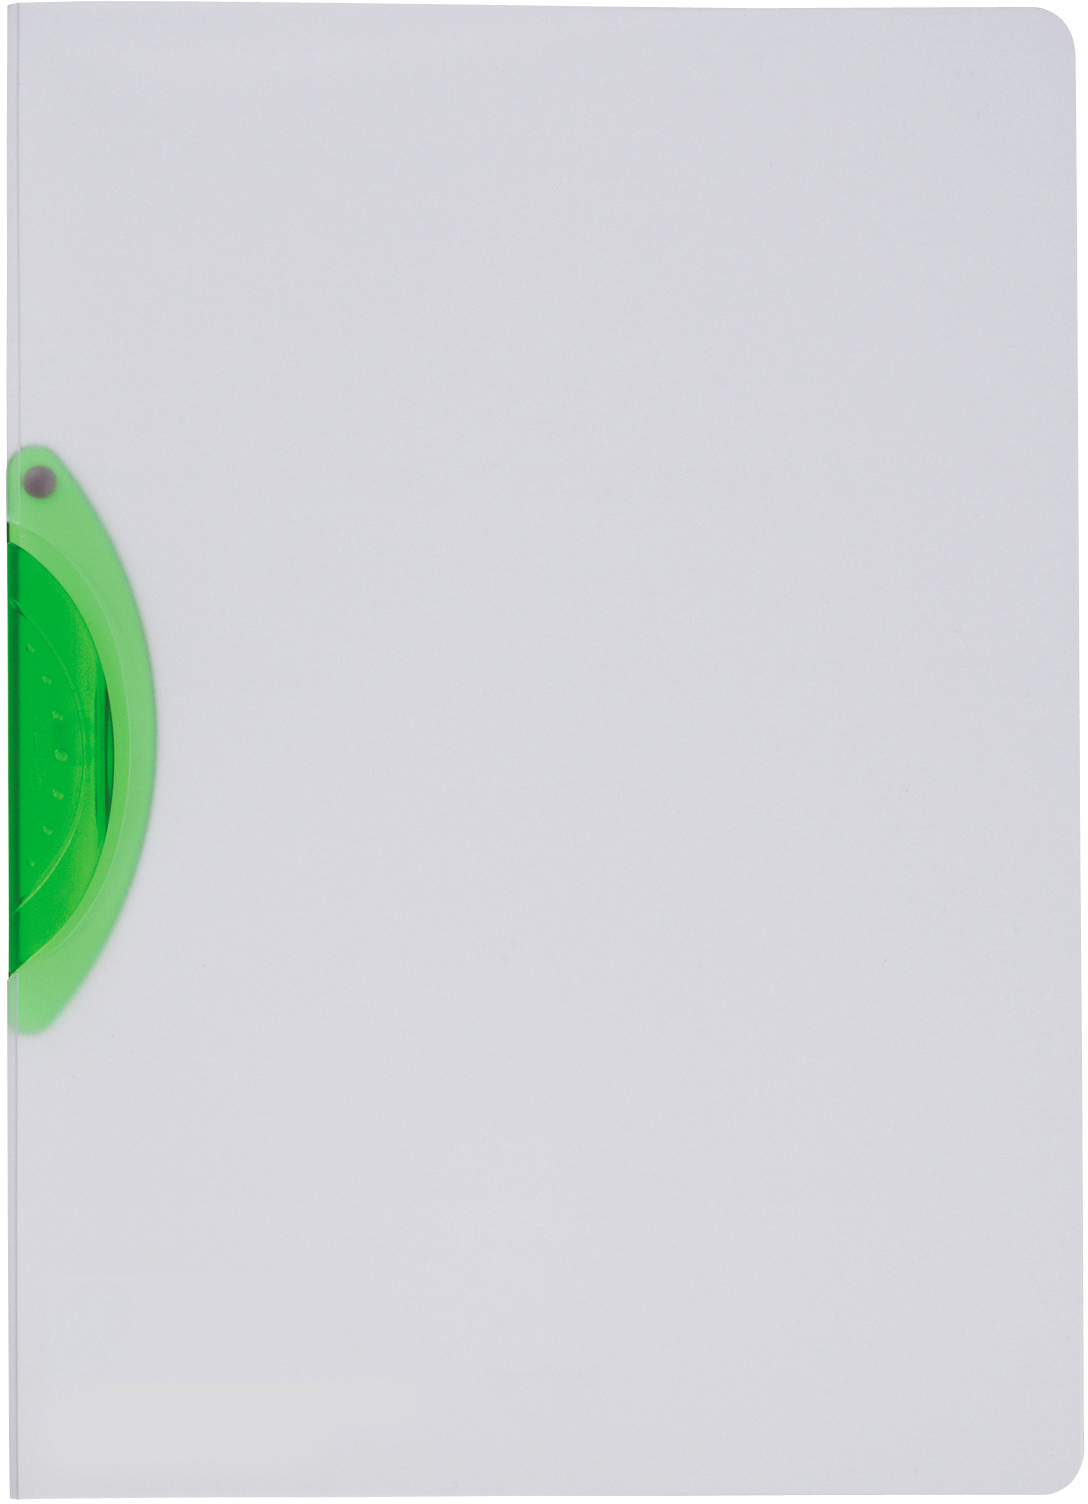 KOLMA Dossier à pince Easy Plus .A4 11.012.01 vert, 30 flls., Kolmaflex